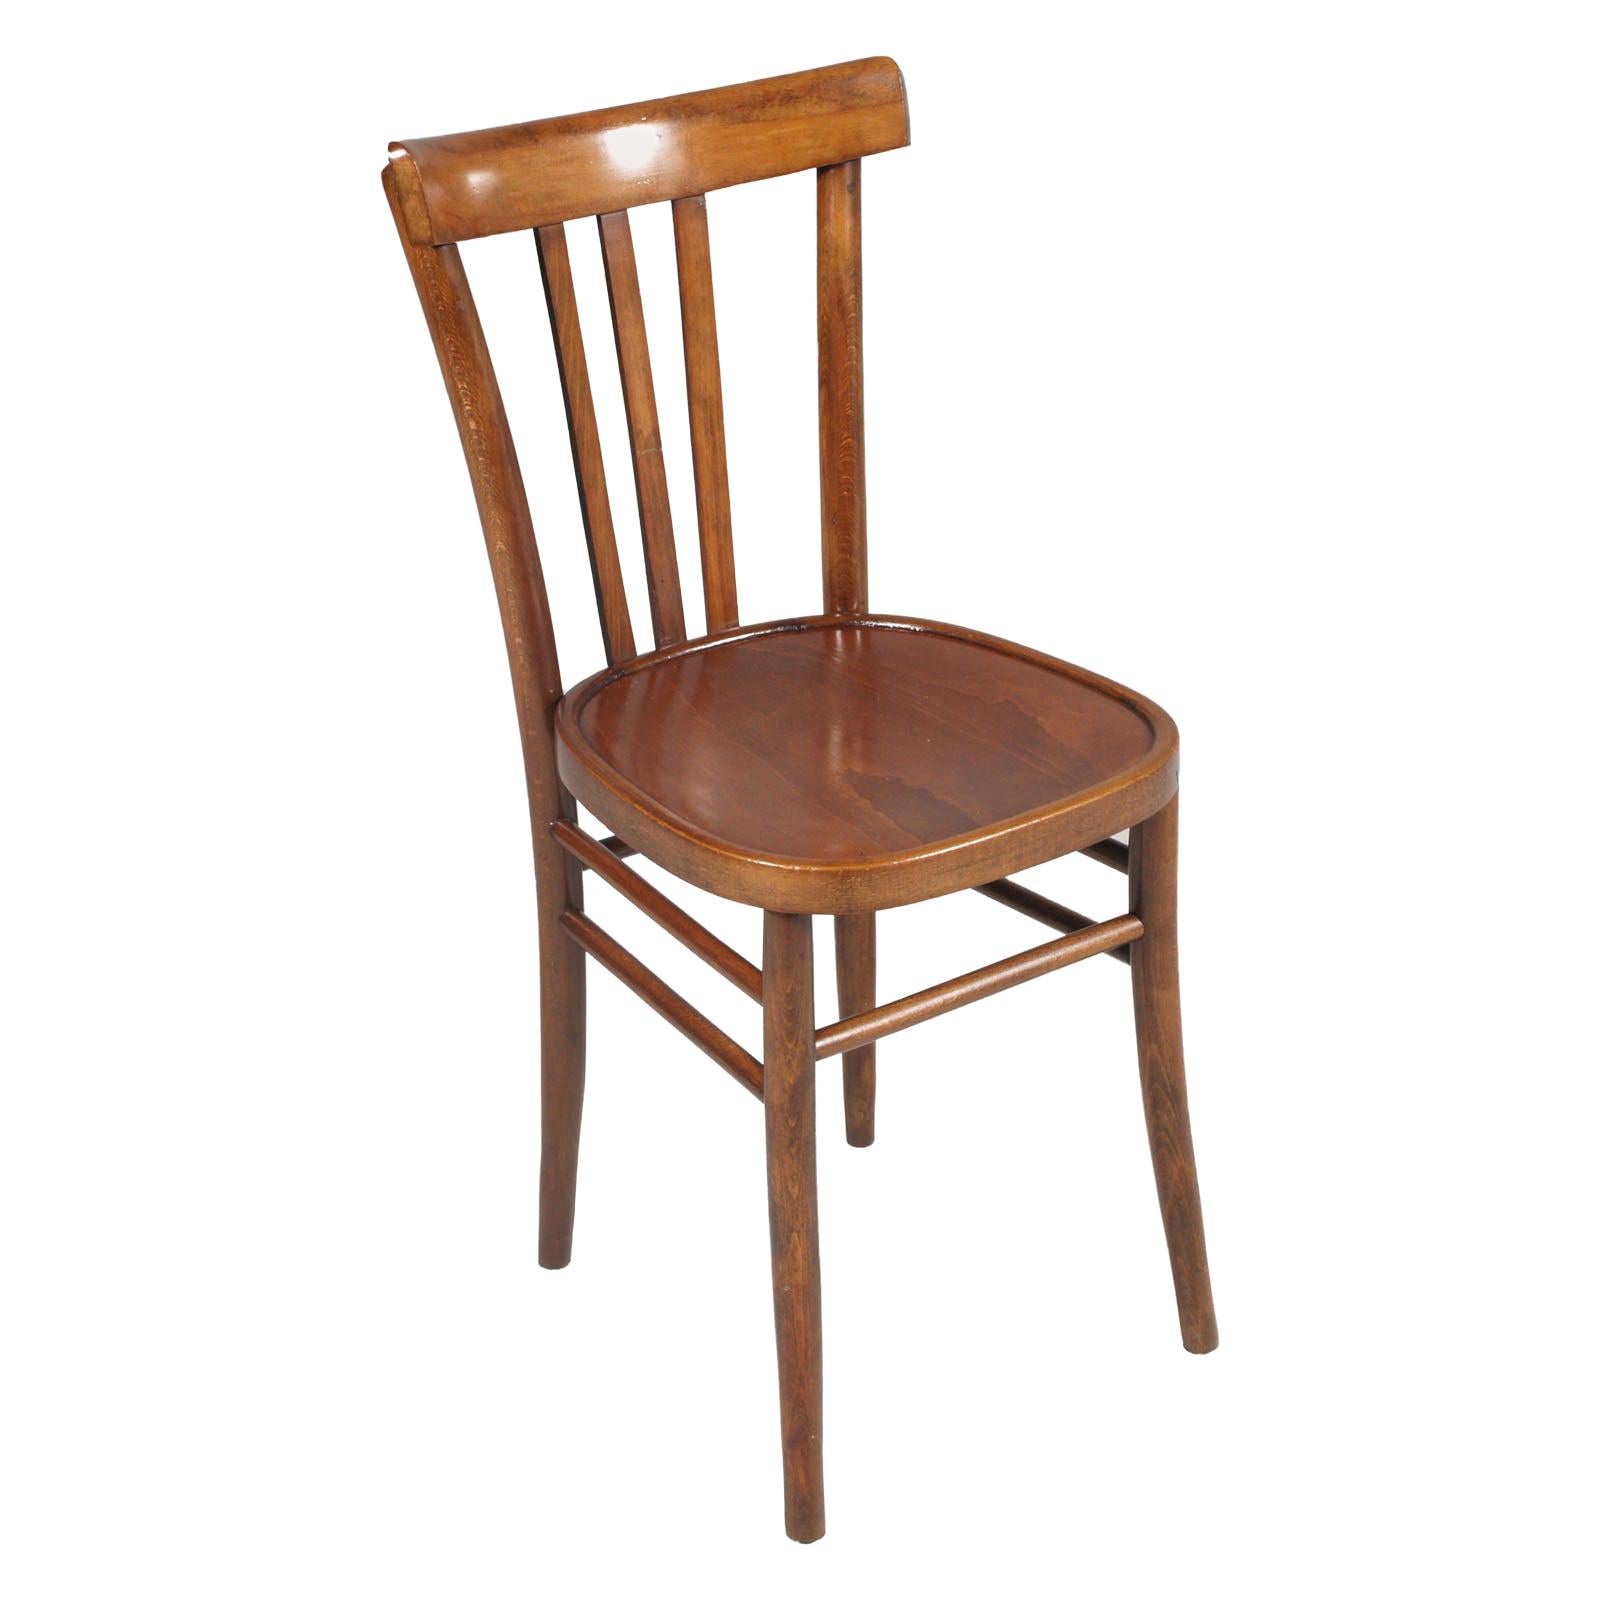 Italian Mid-Century Modern Kitchen Chair in Walnut Restored and Wax Polished